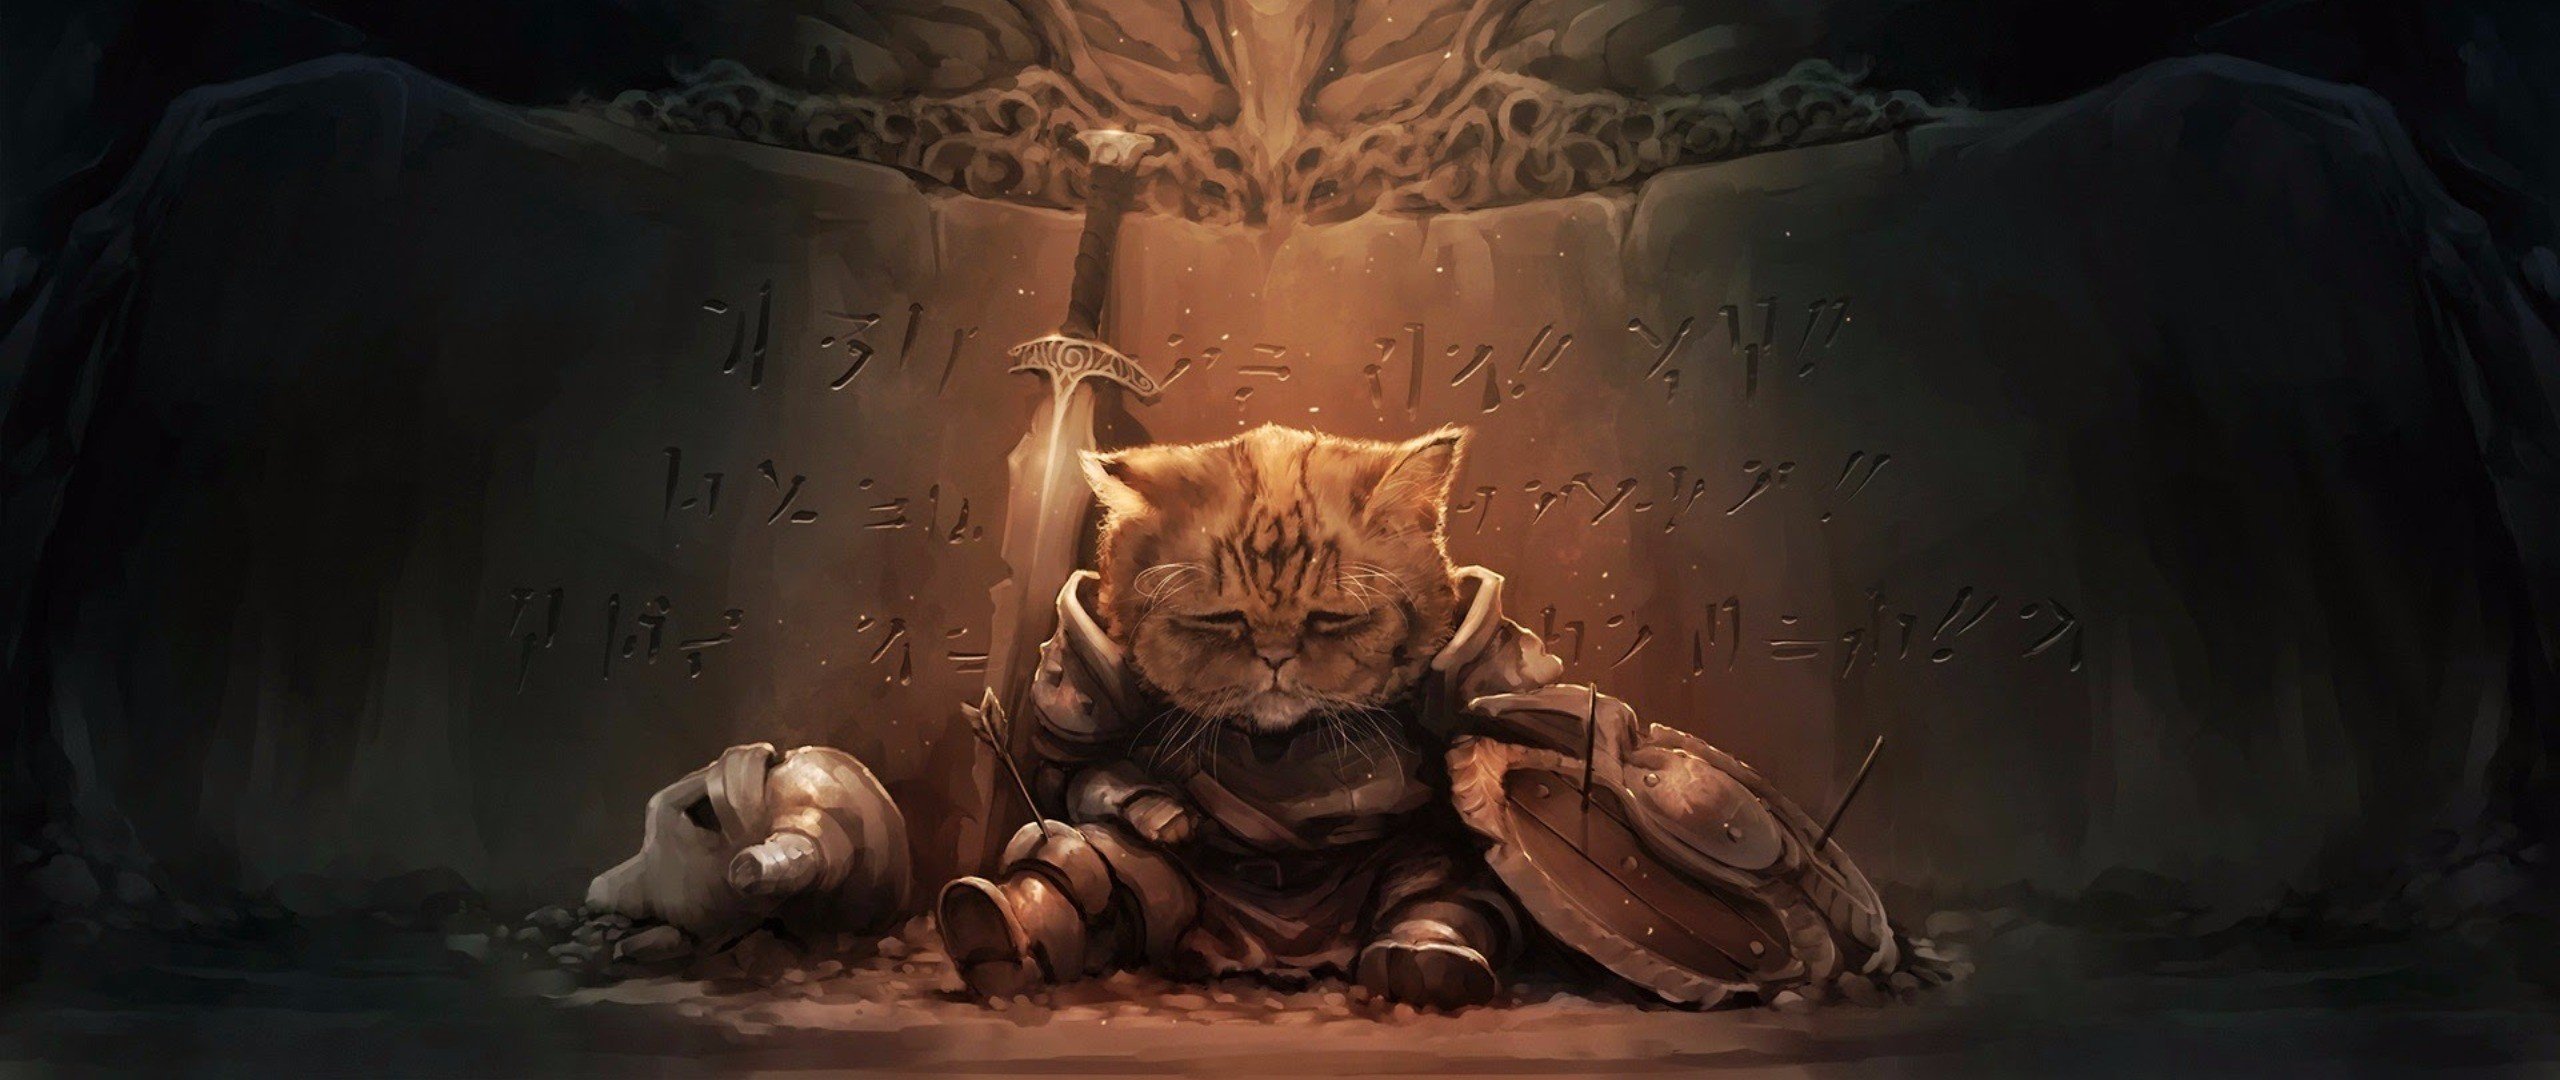 Wallpaper, cat, The Elder Scrolls V Skyrim, demon, mythology, darkness, screenshot, computer wallpaper, fictional character 2560x1080